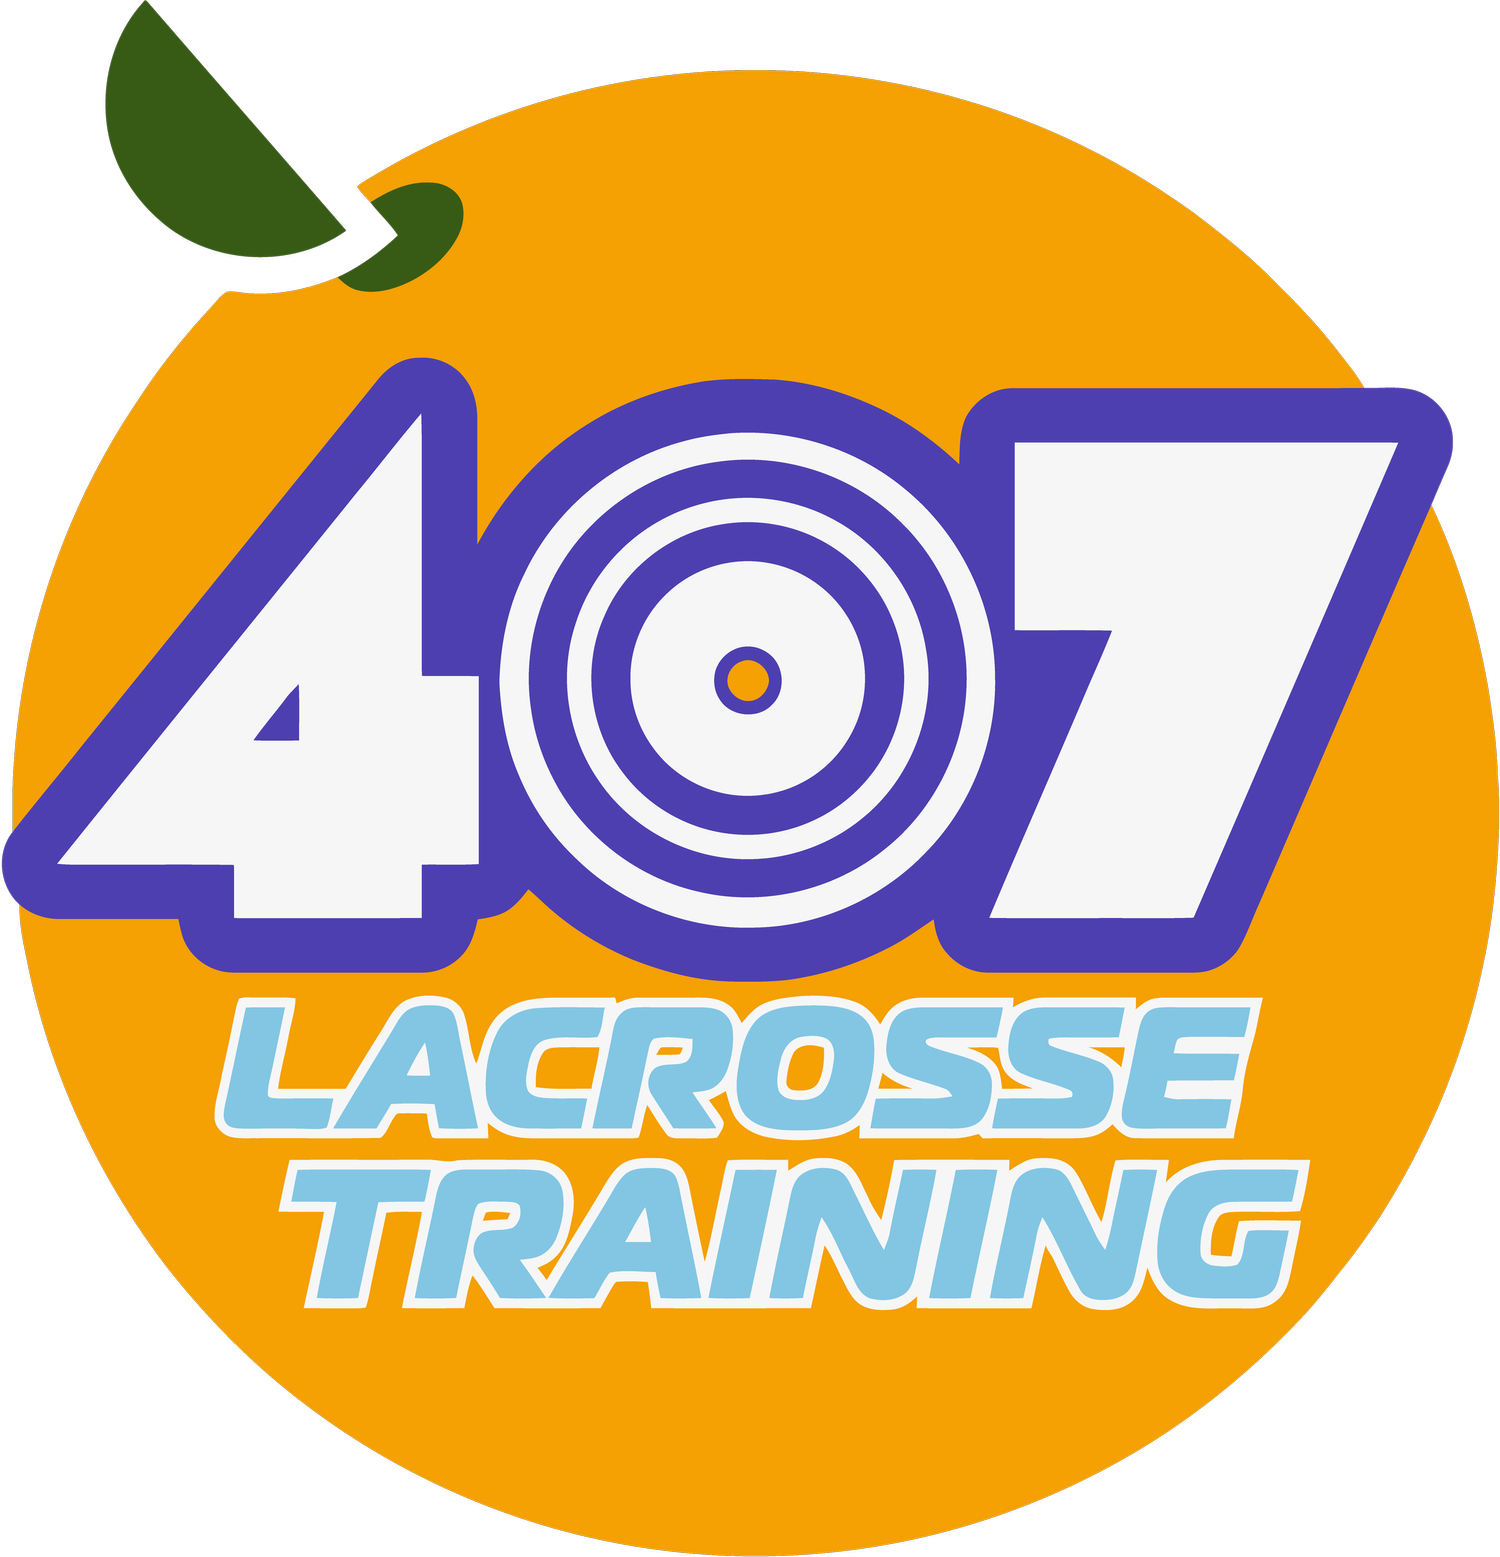 407 Lacrosse Training, LLC